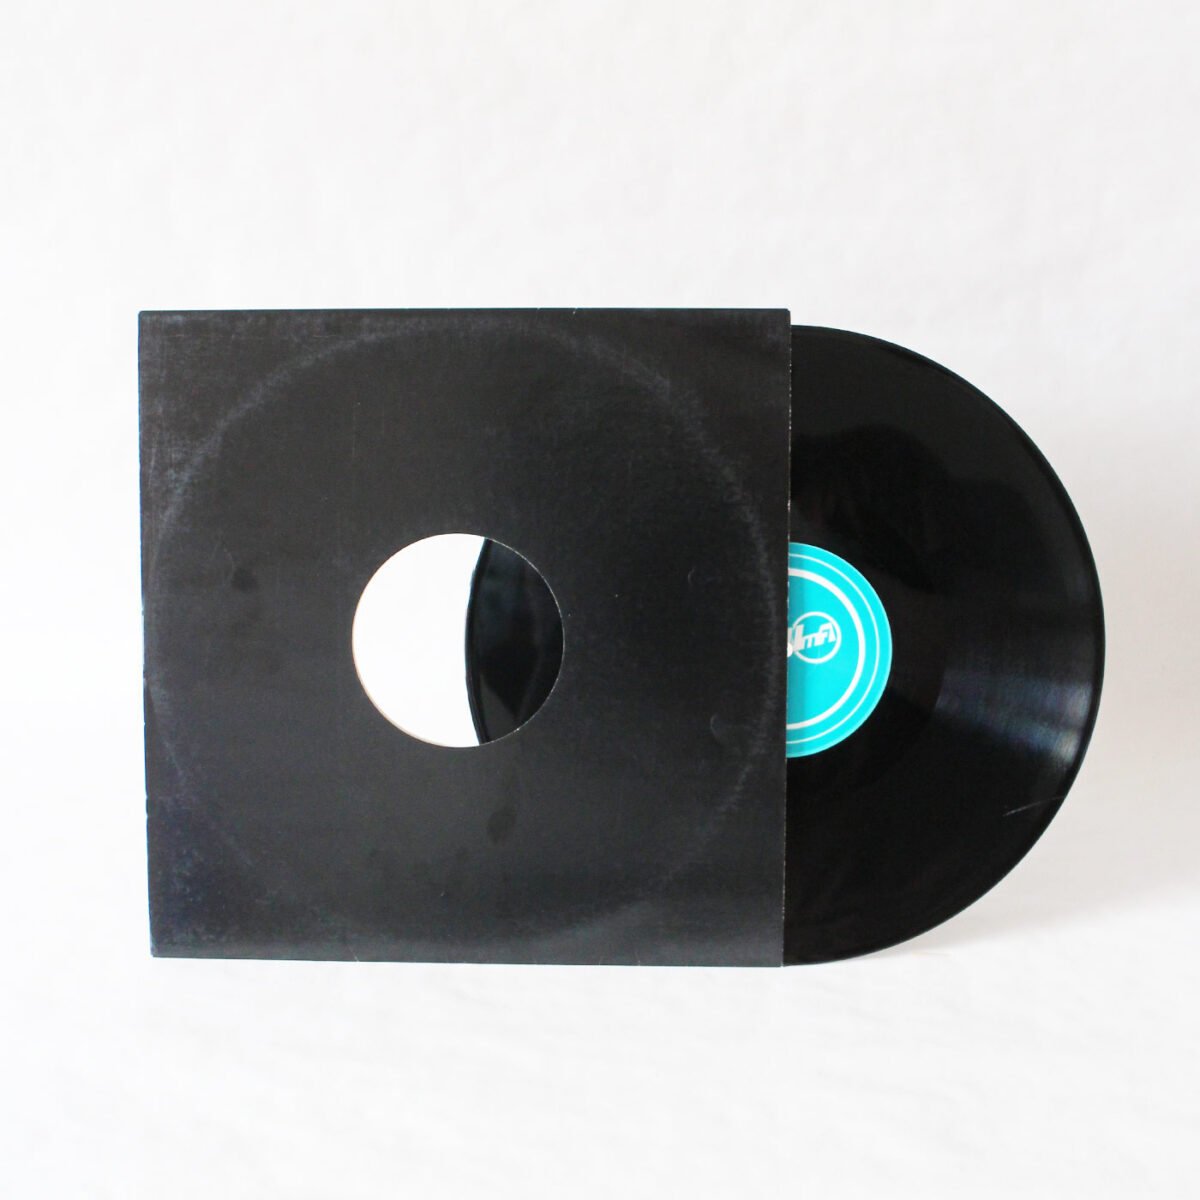 The Unknown Wanderer - Don't Start Just Finish It (Vinyl Second Hand) Minimal Techno Pnuma – PNUMA 005